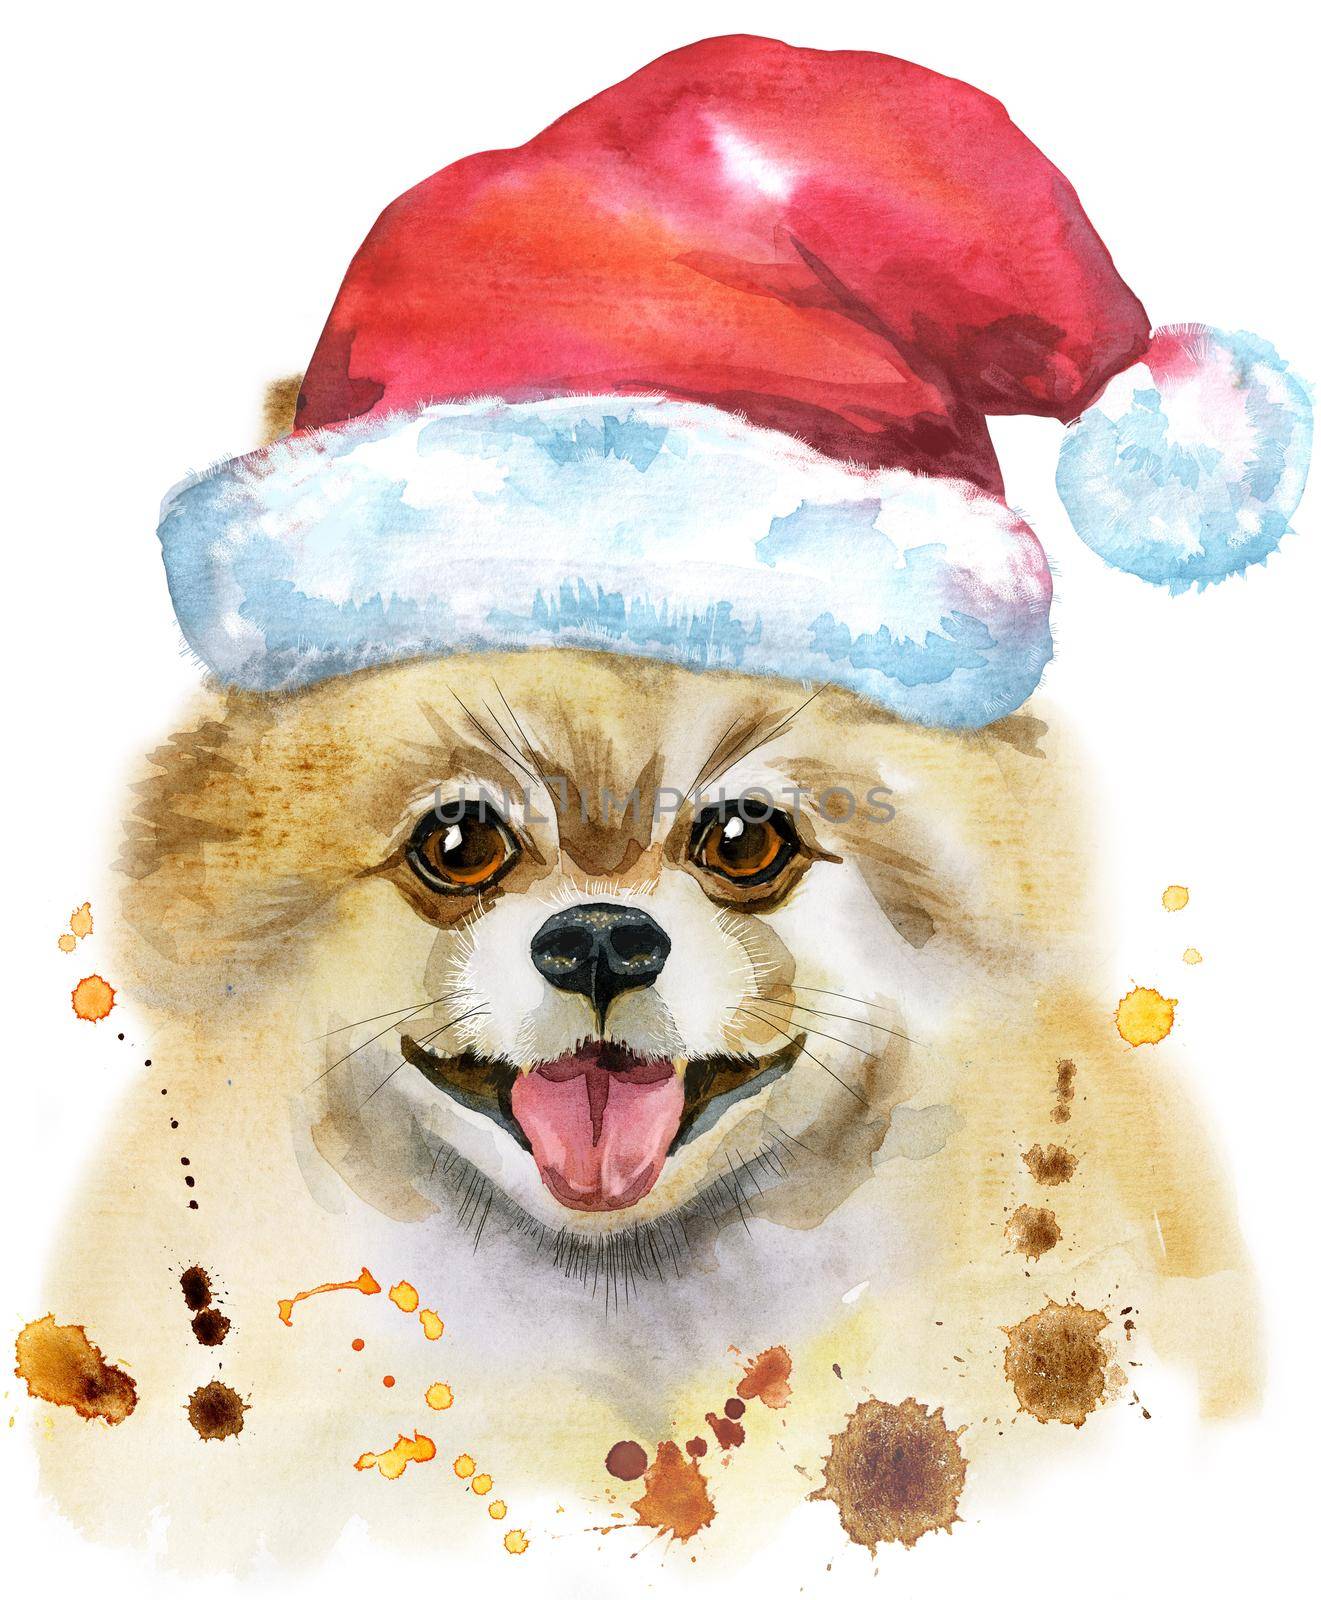 Cute Dog. Dog T-shirt graphics. watercolor pomeranian spitz illustration with Santa hat